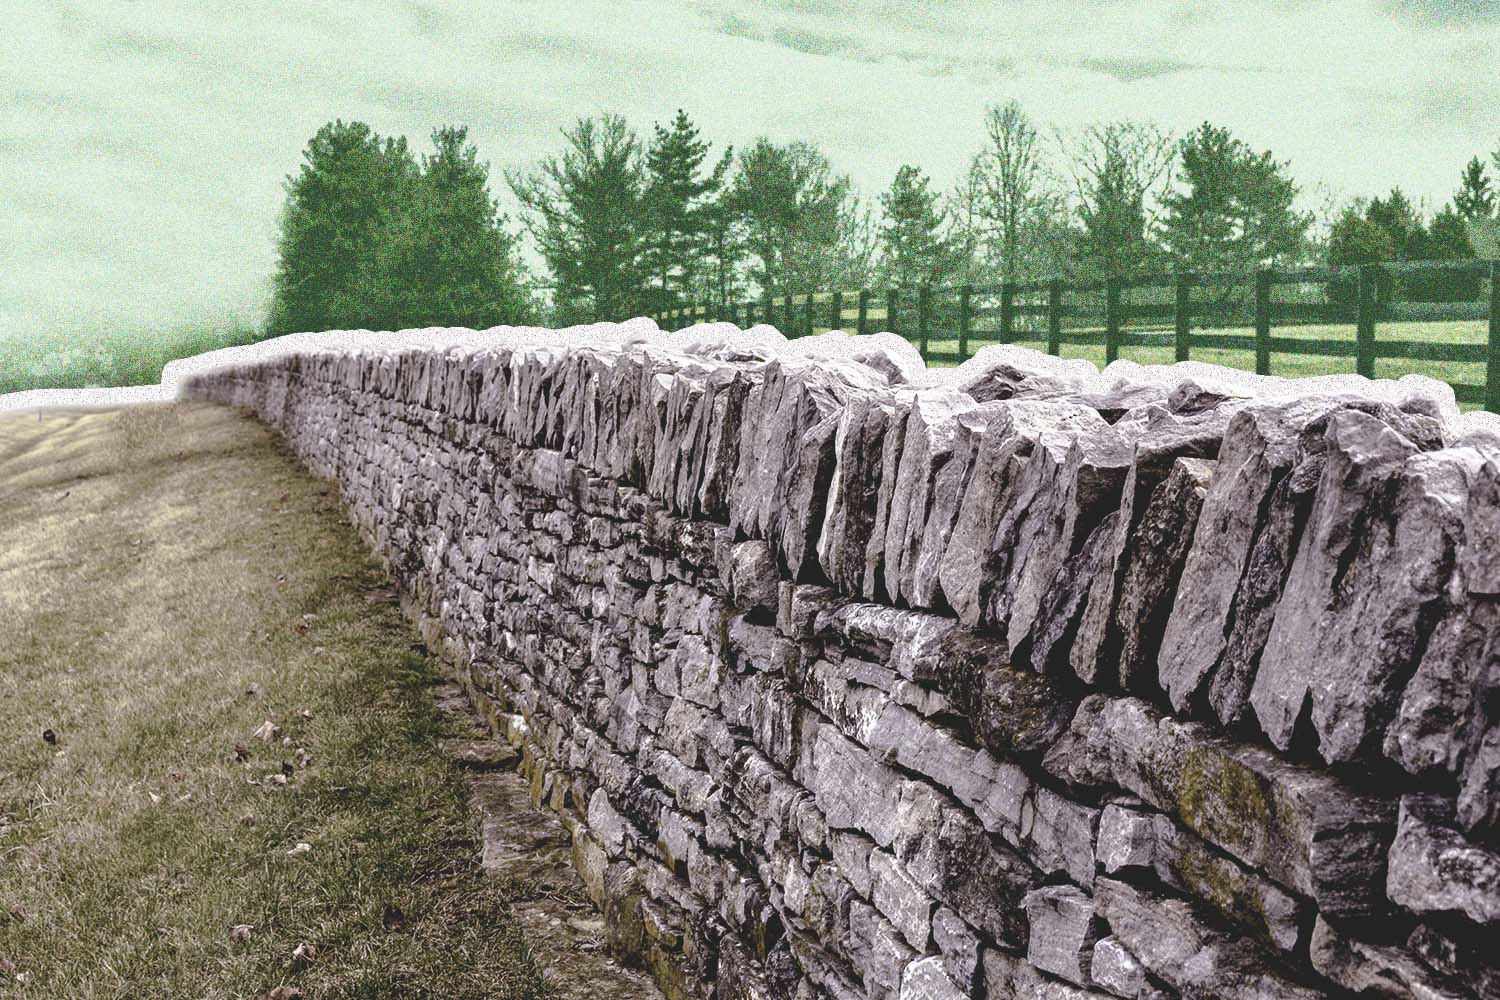 Brick wall creating a boundary